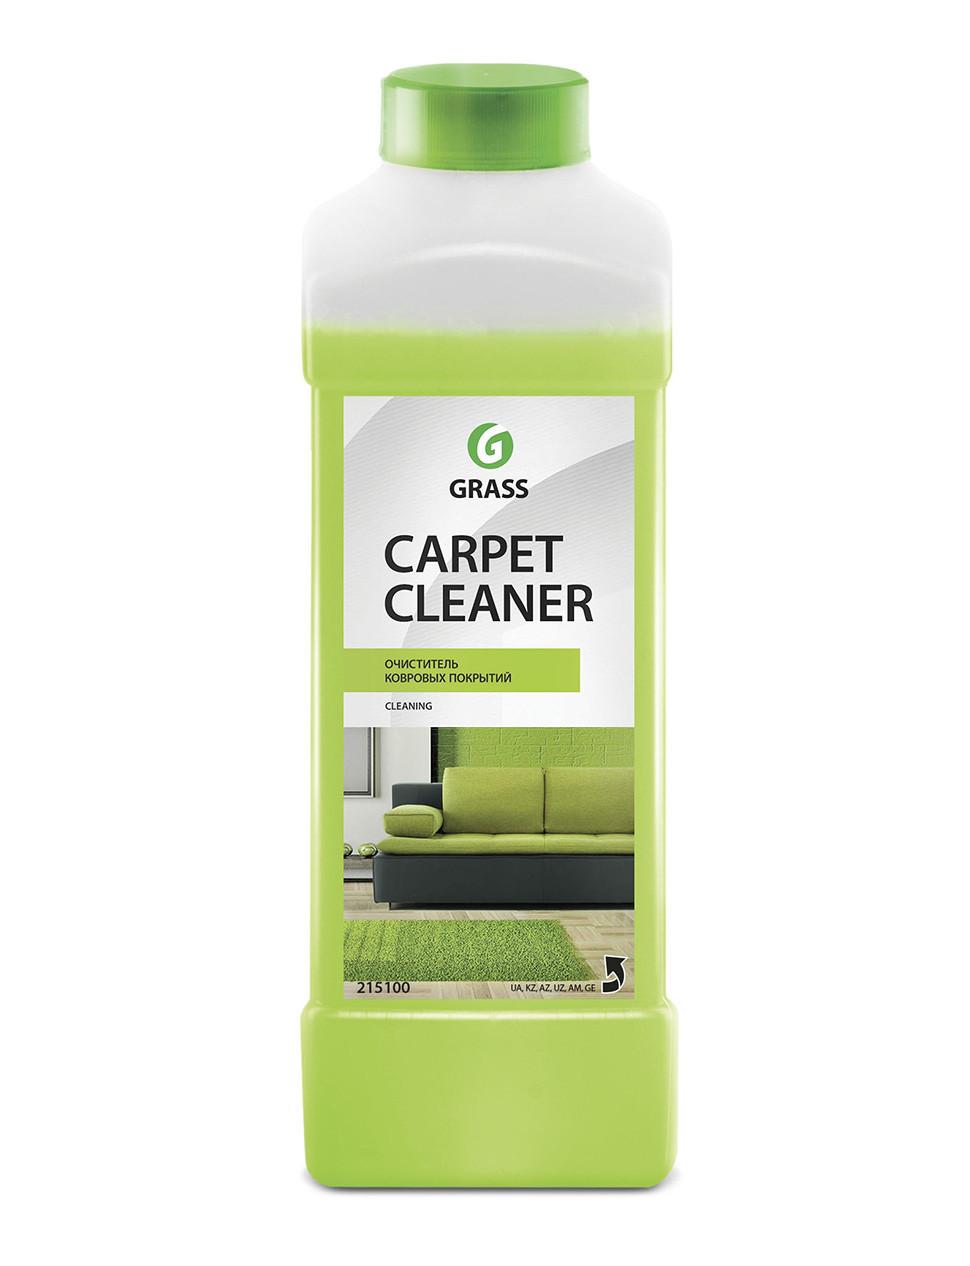 Grass carpet cleaner